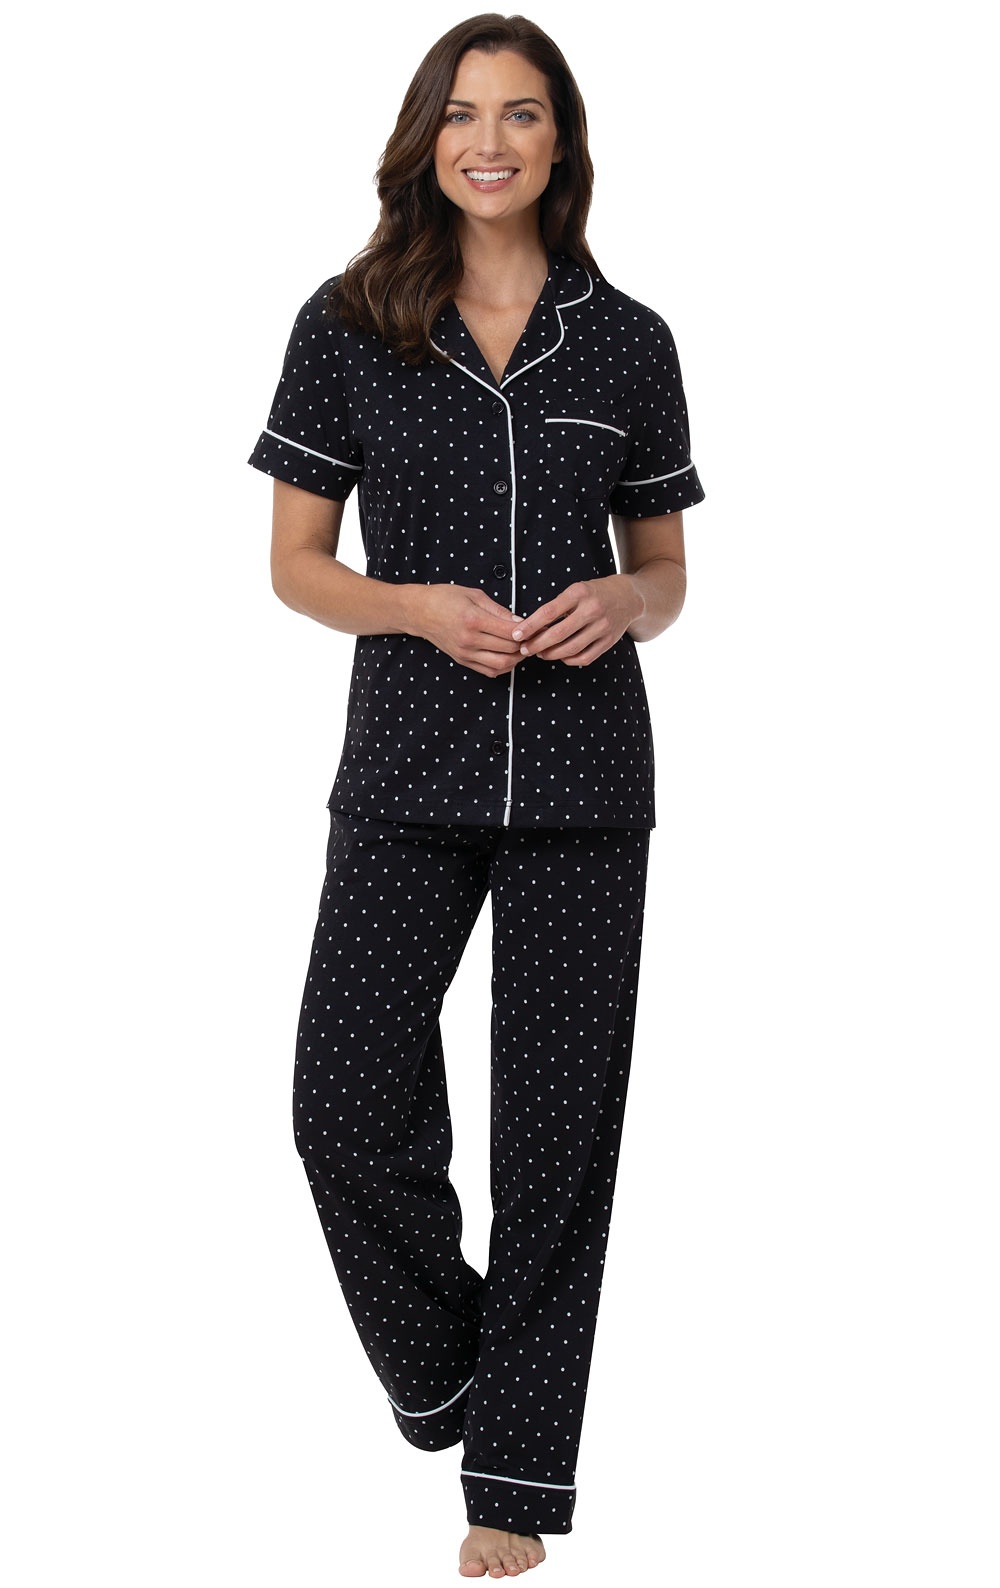 Polka Dot Pajama Sets | Pajama Sets & Sleepwear | PajamaGram